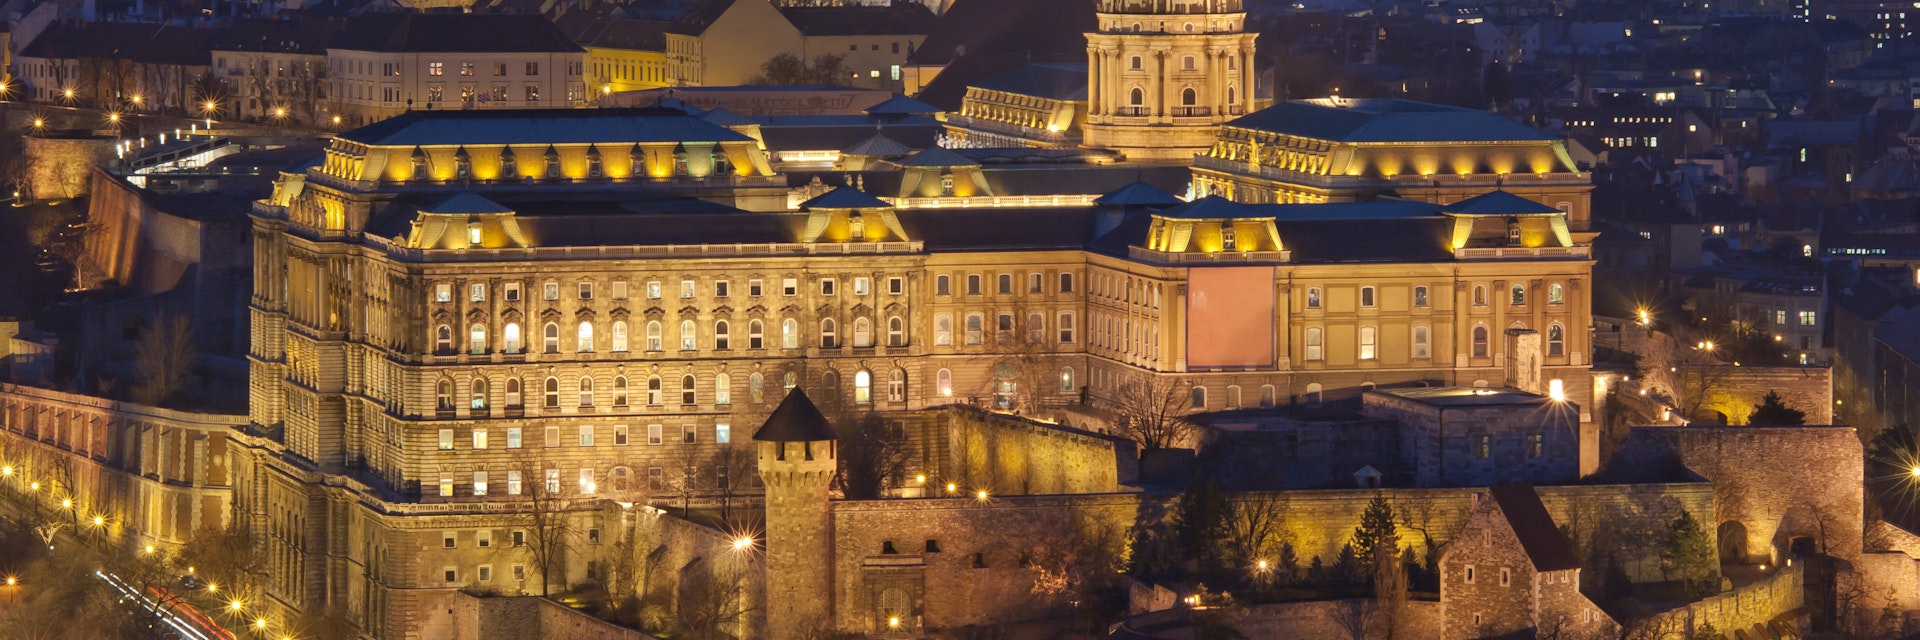 Royal Palace by night, Budapest